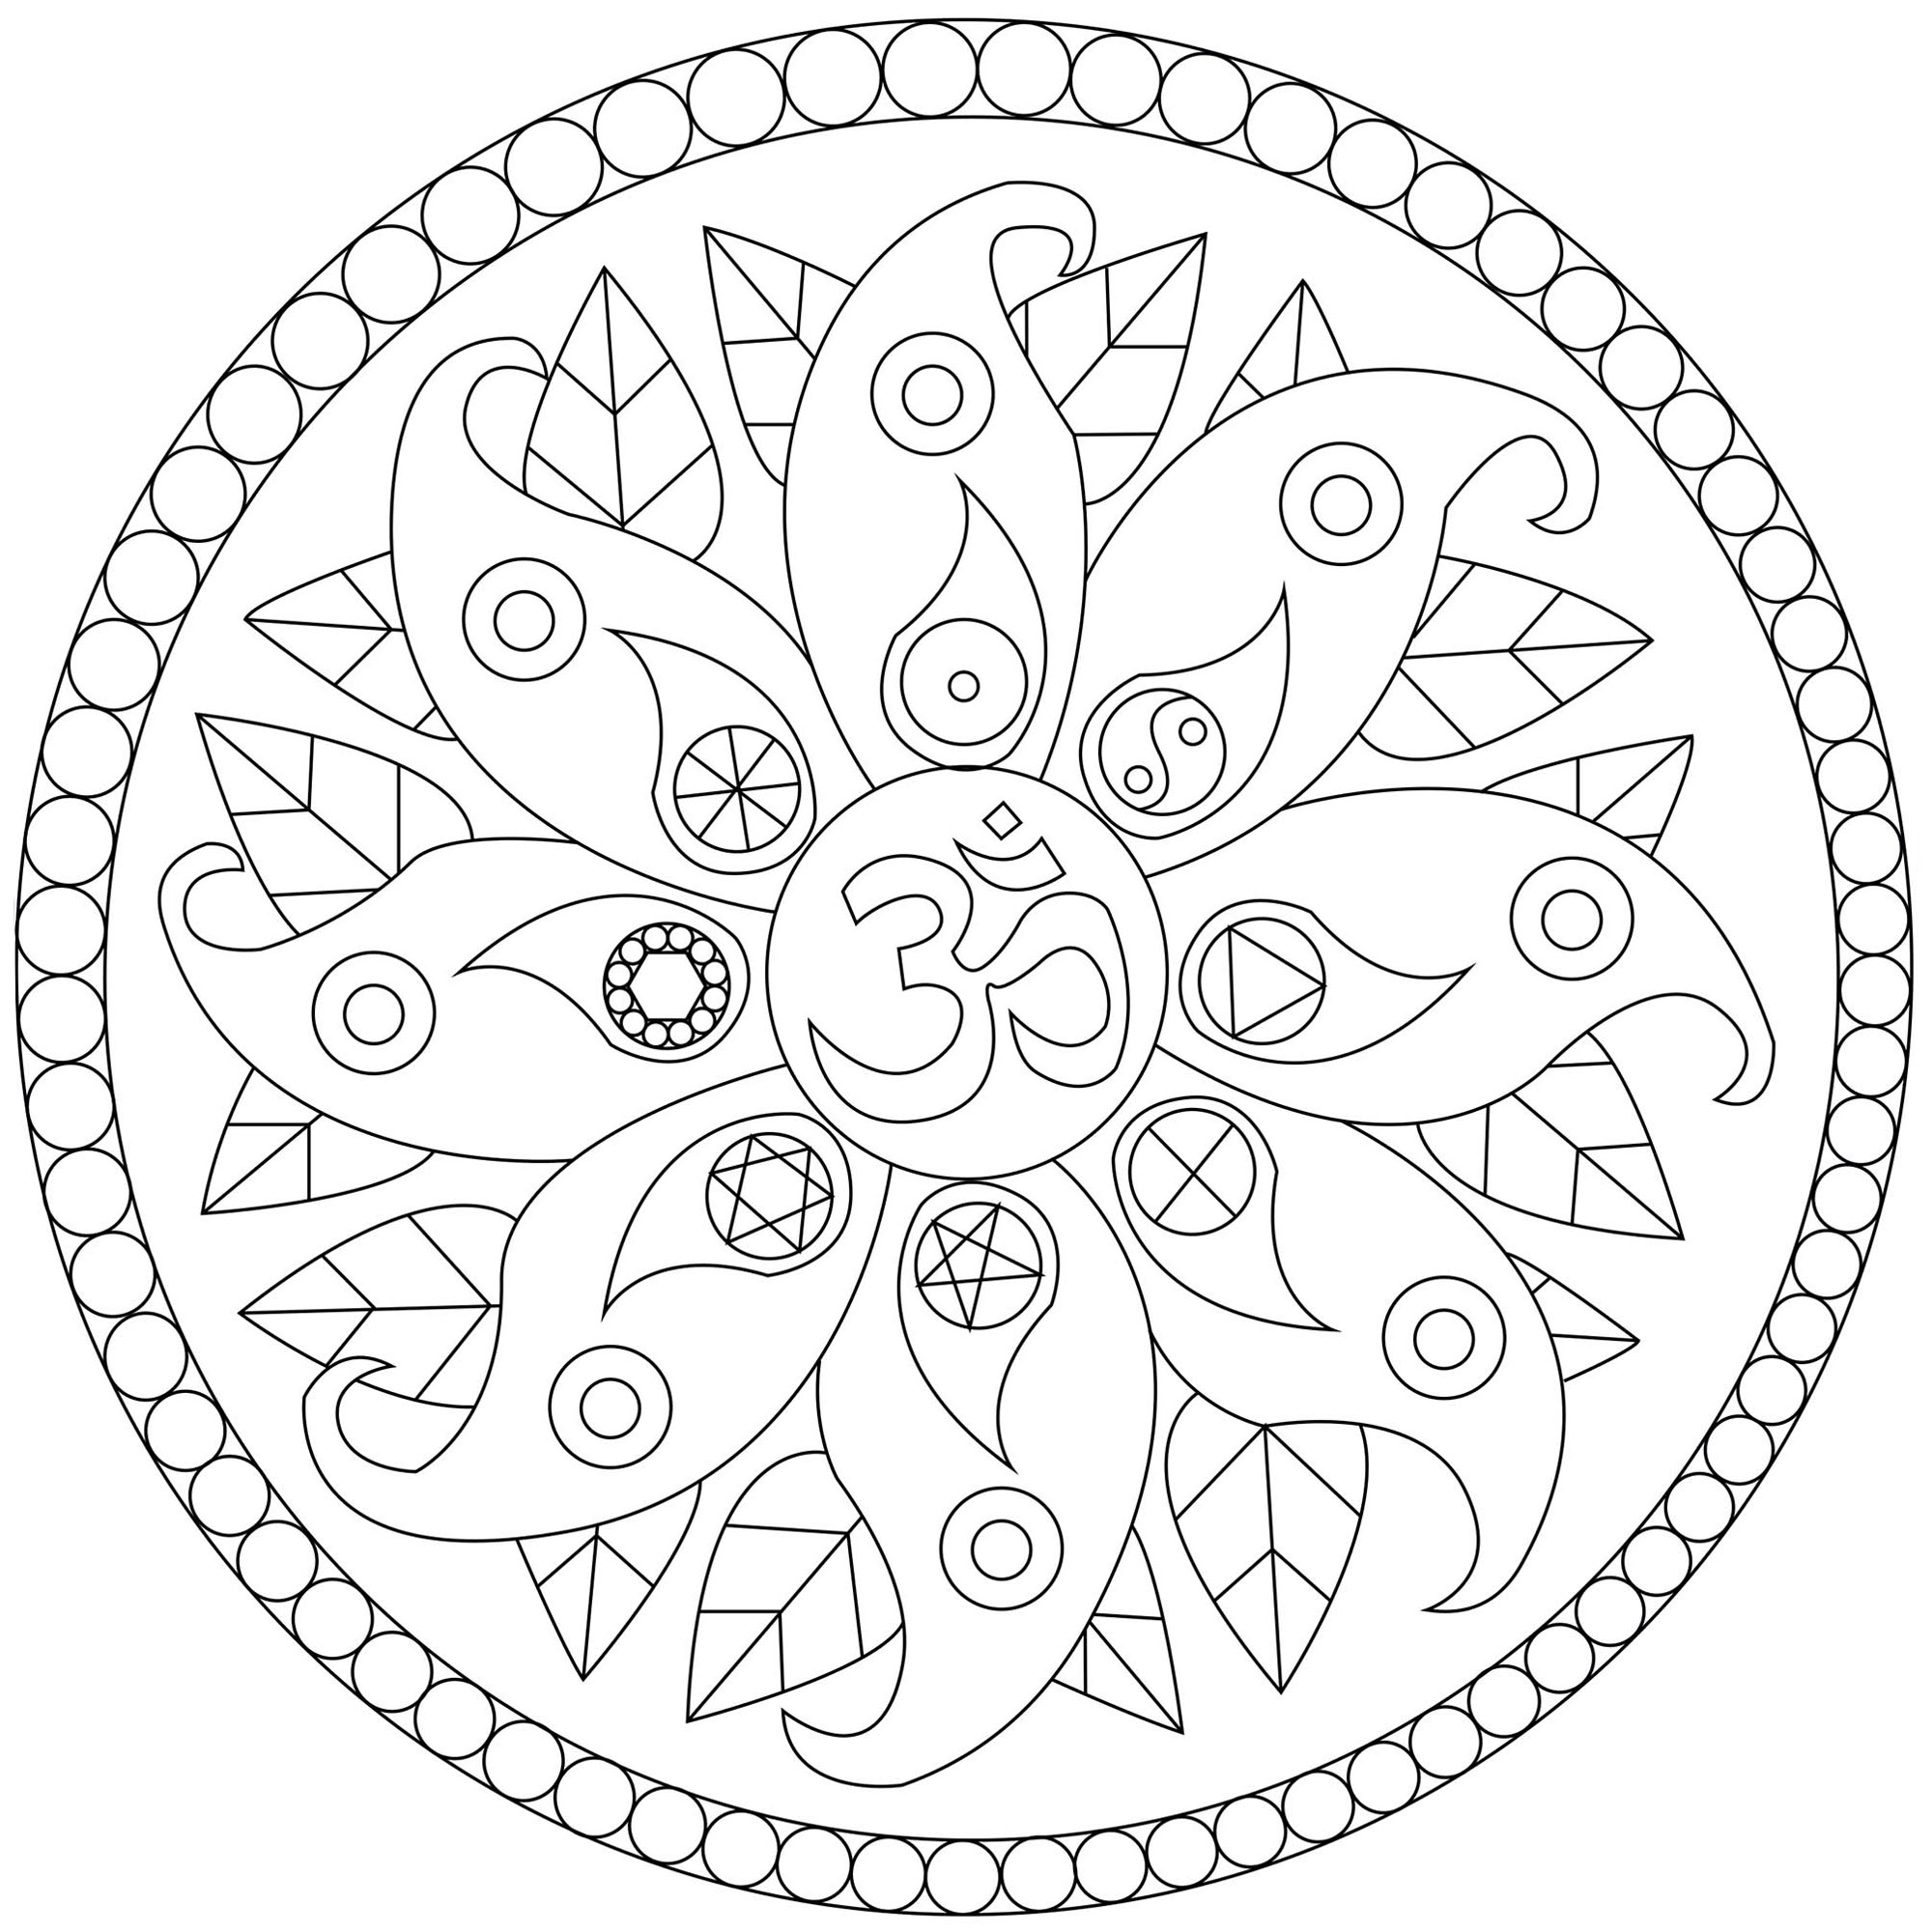 Mandala with peace symbols - Mandalas Adult Coloring Pages